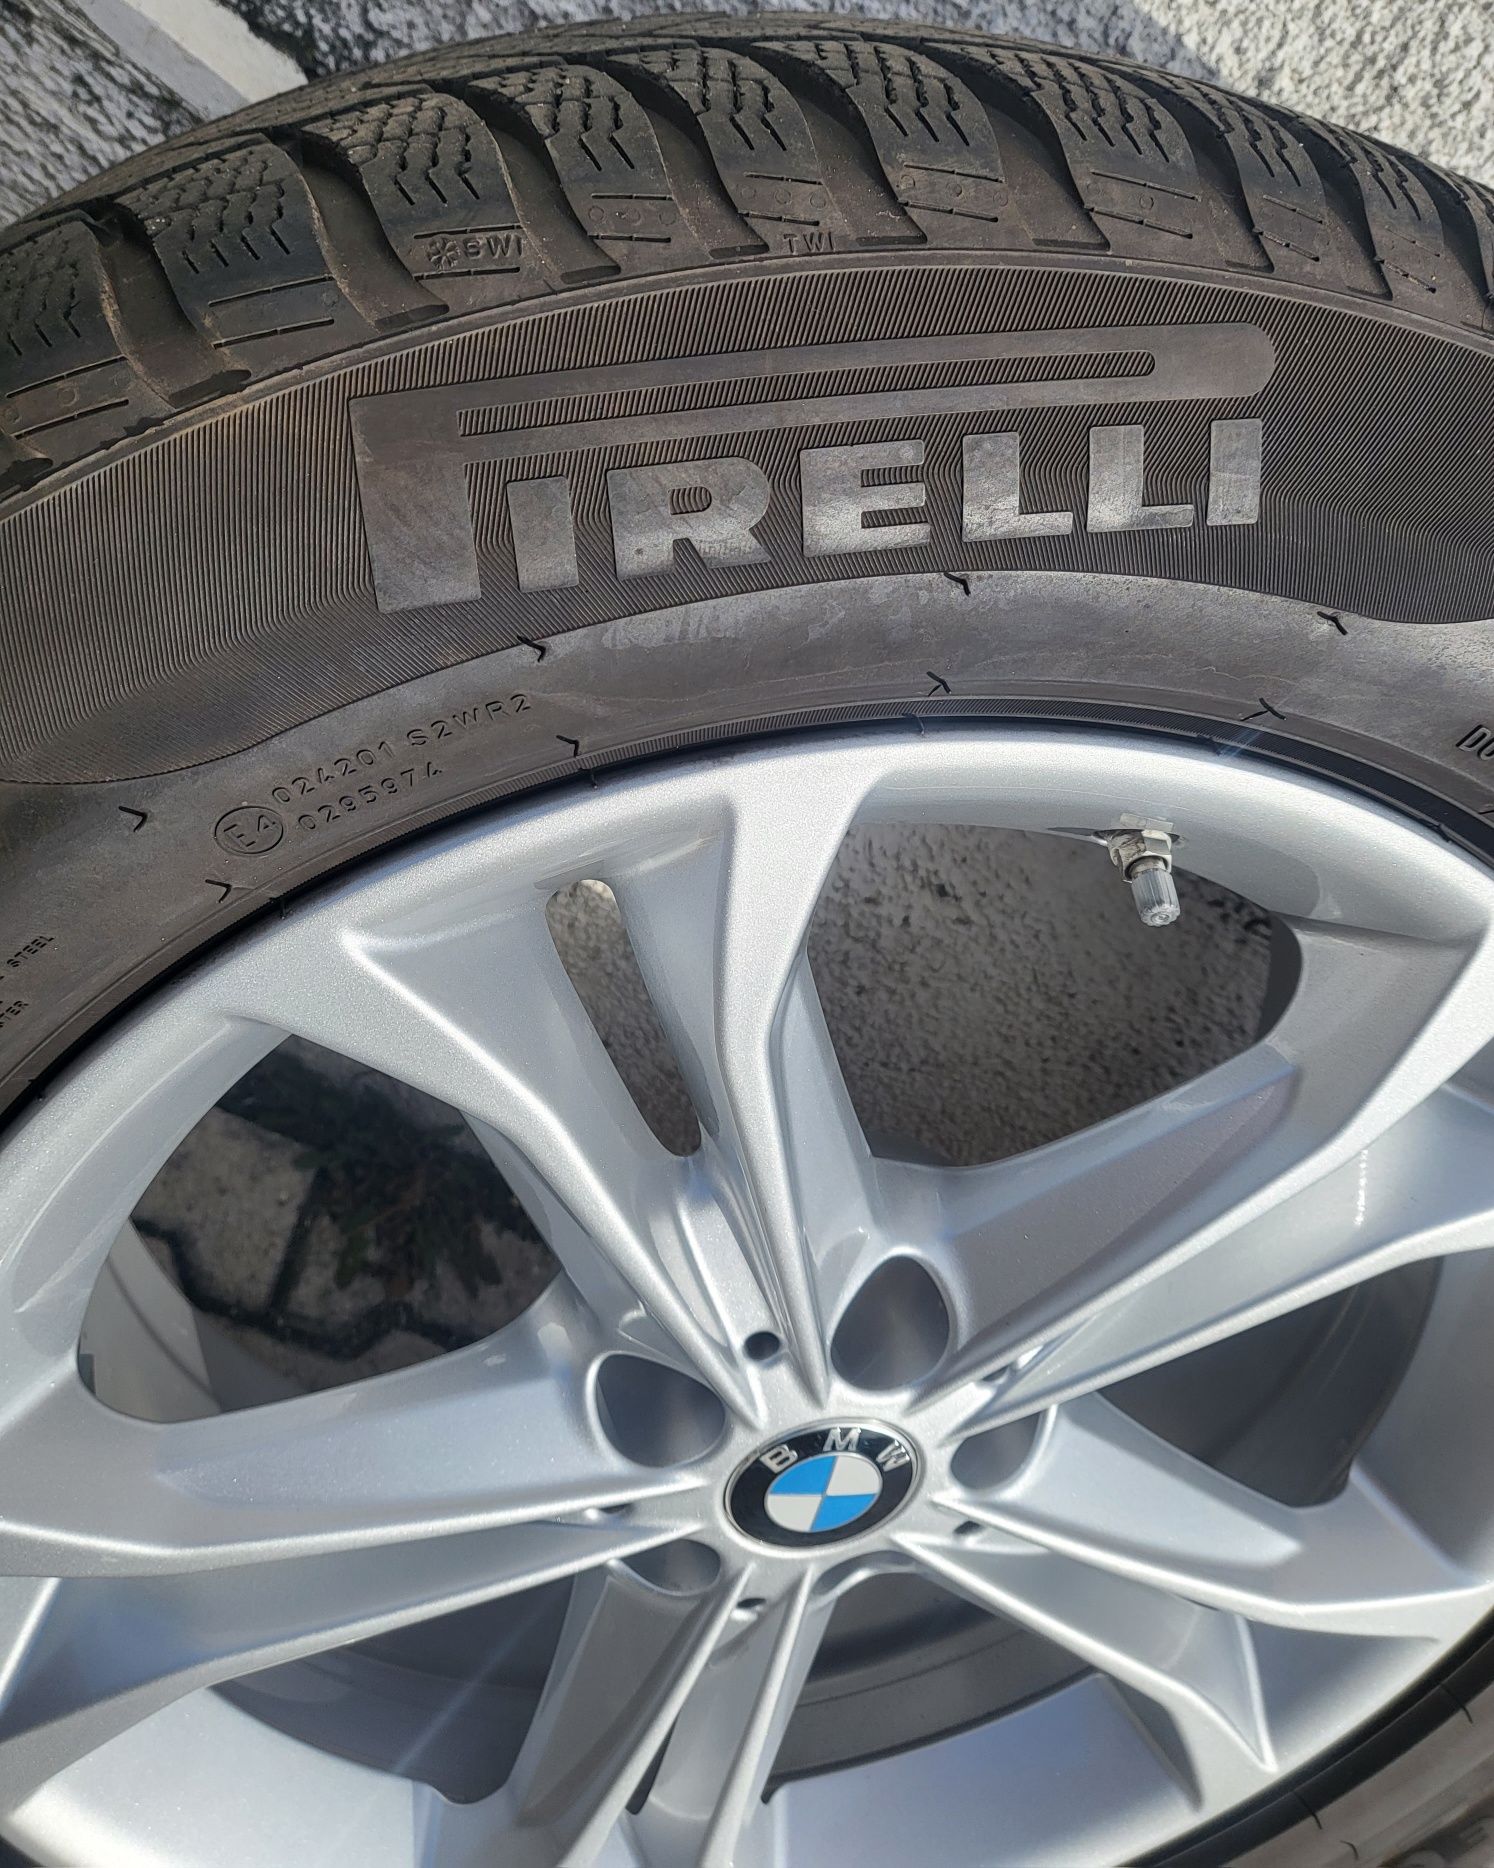 Jante aliaj BMW X3, R18, anvelope iarna Pirelli 225 60 18